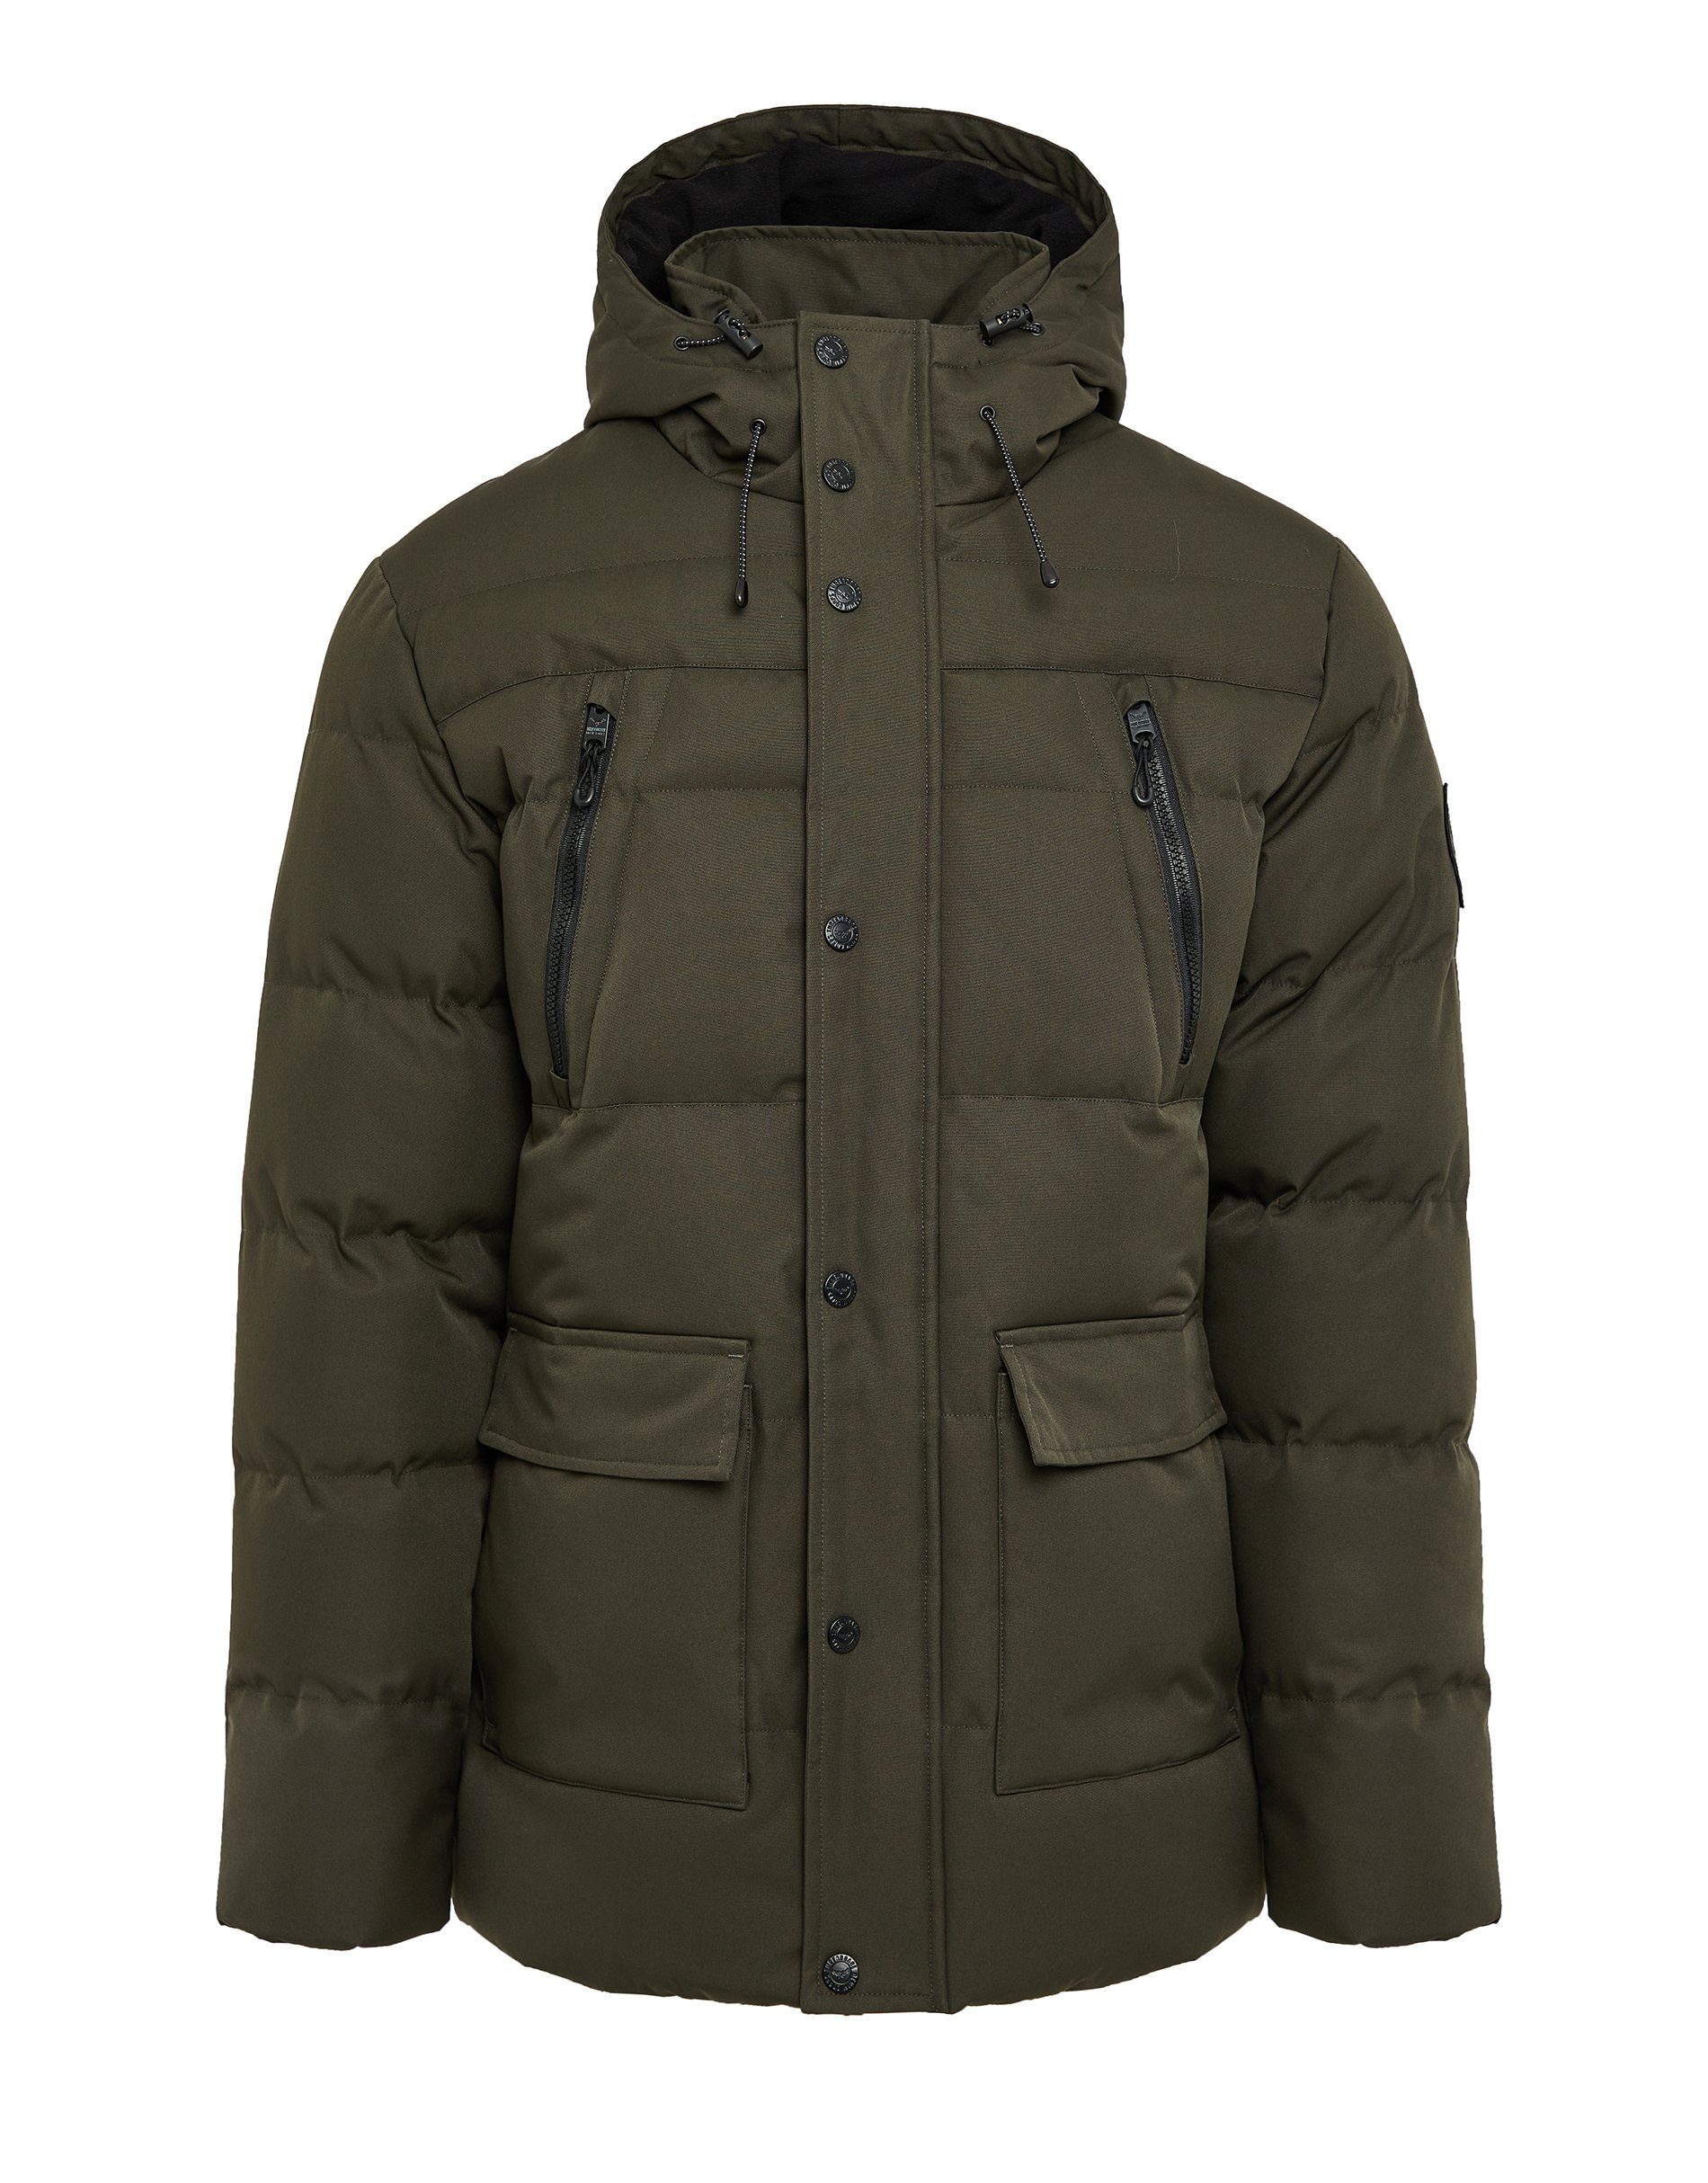 Global Jacket Standard Threadbare olivgrün Winterjacke (GRS) Jackton Recycled zertifiziert Khaki- THB